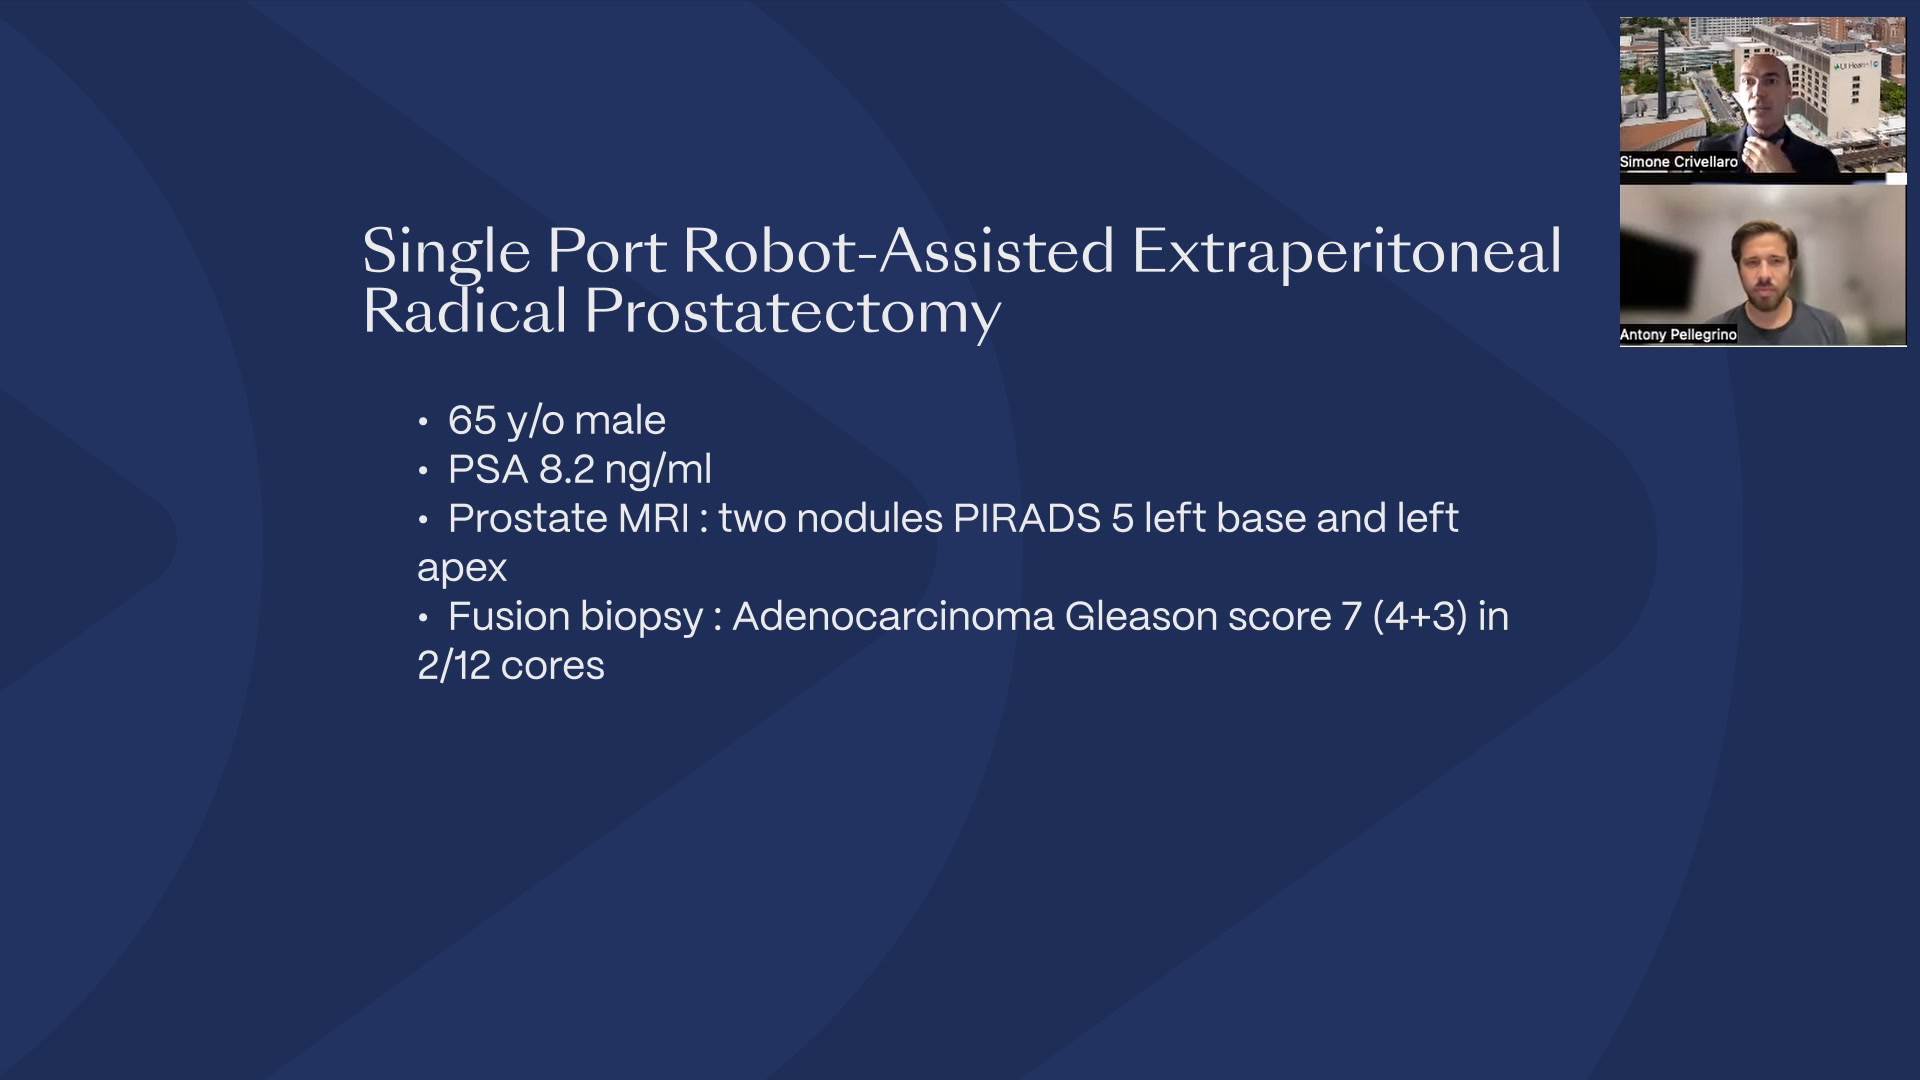 Single Port Robot Assisted Radical Prostatectomy